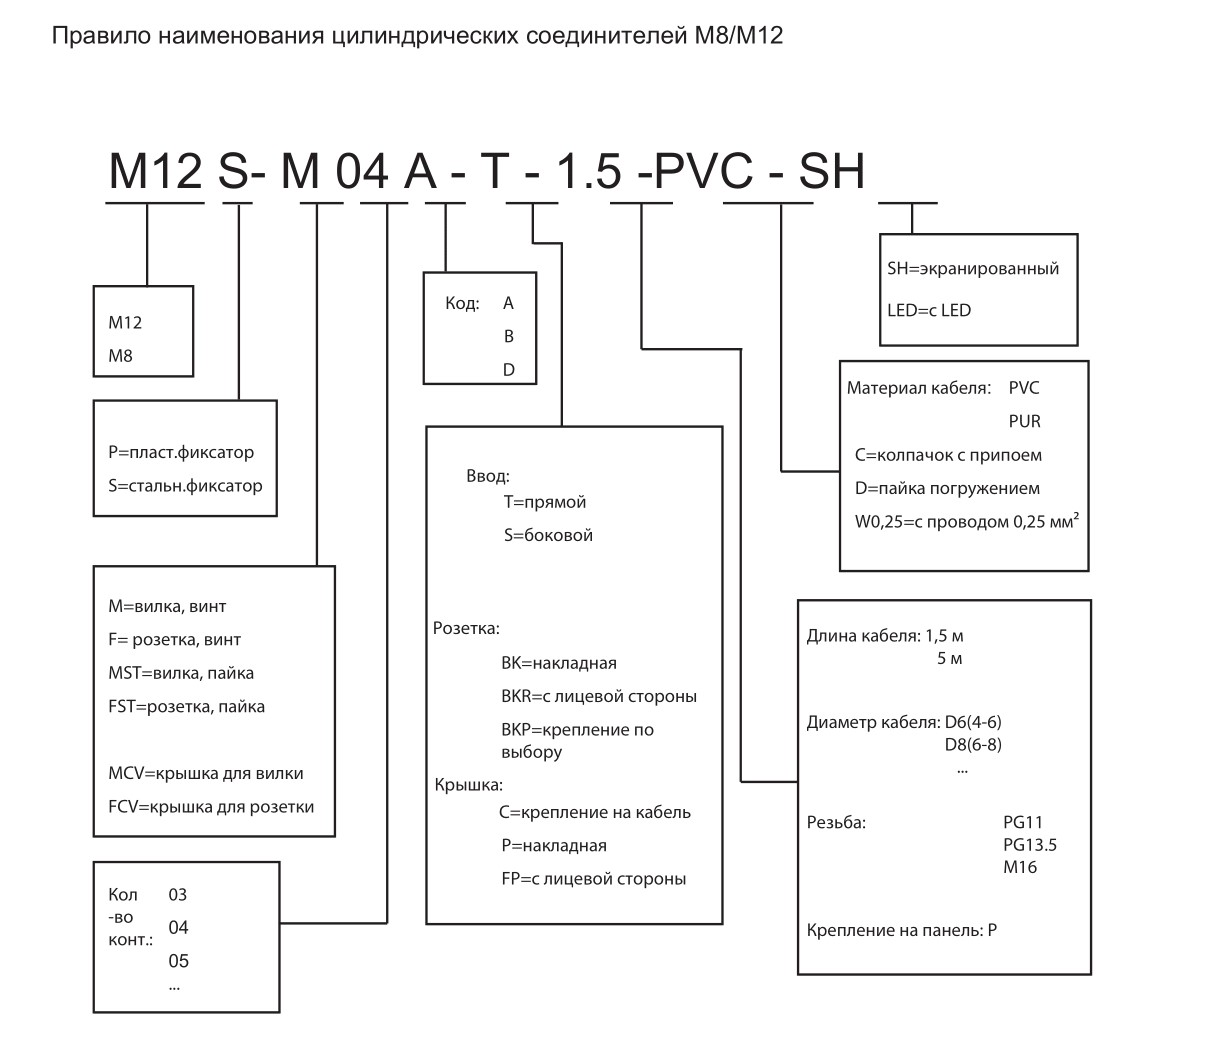 Цилиндрический соединитель-розетка M8-F04-S-D5.5-SH 1620045022003: Структура обозначения